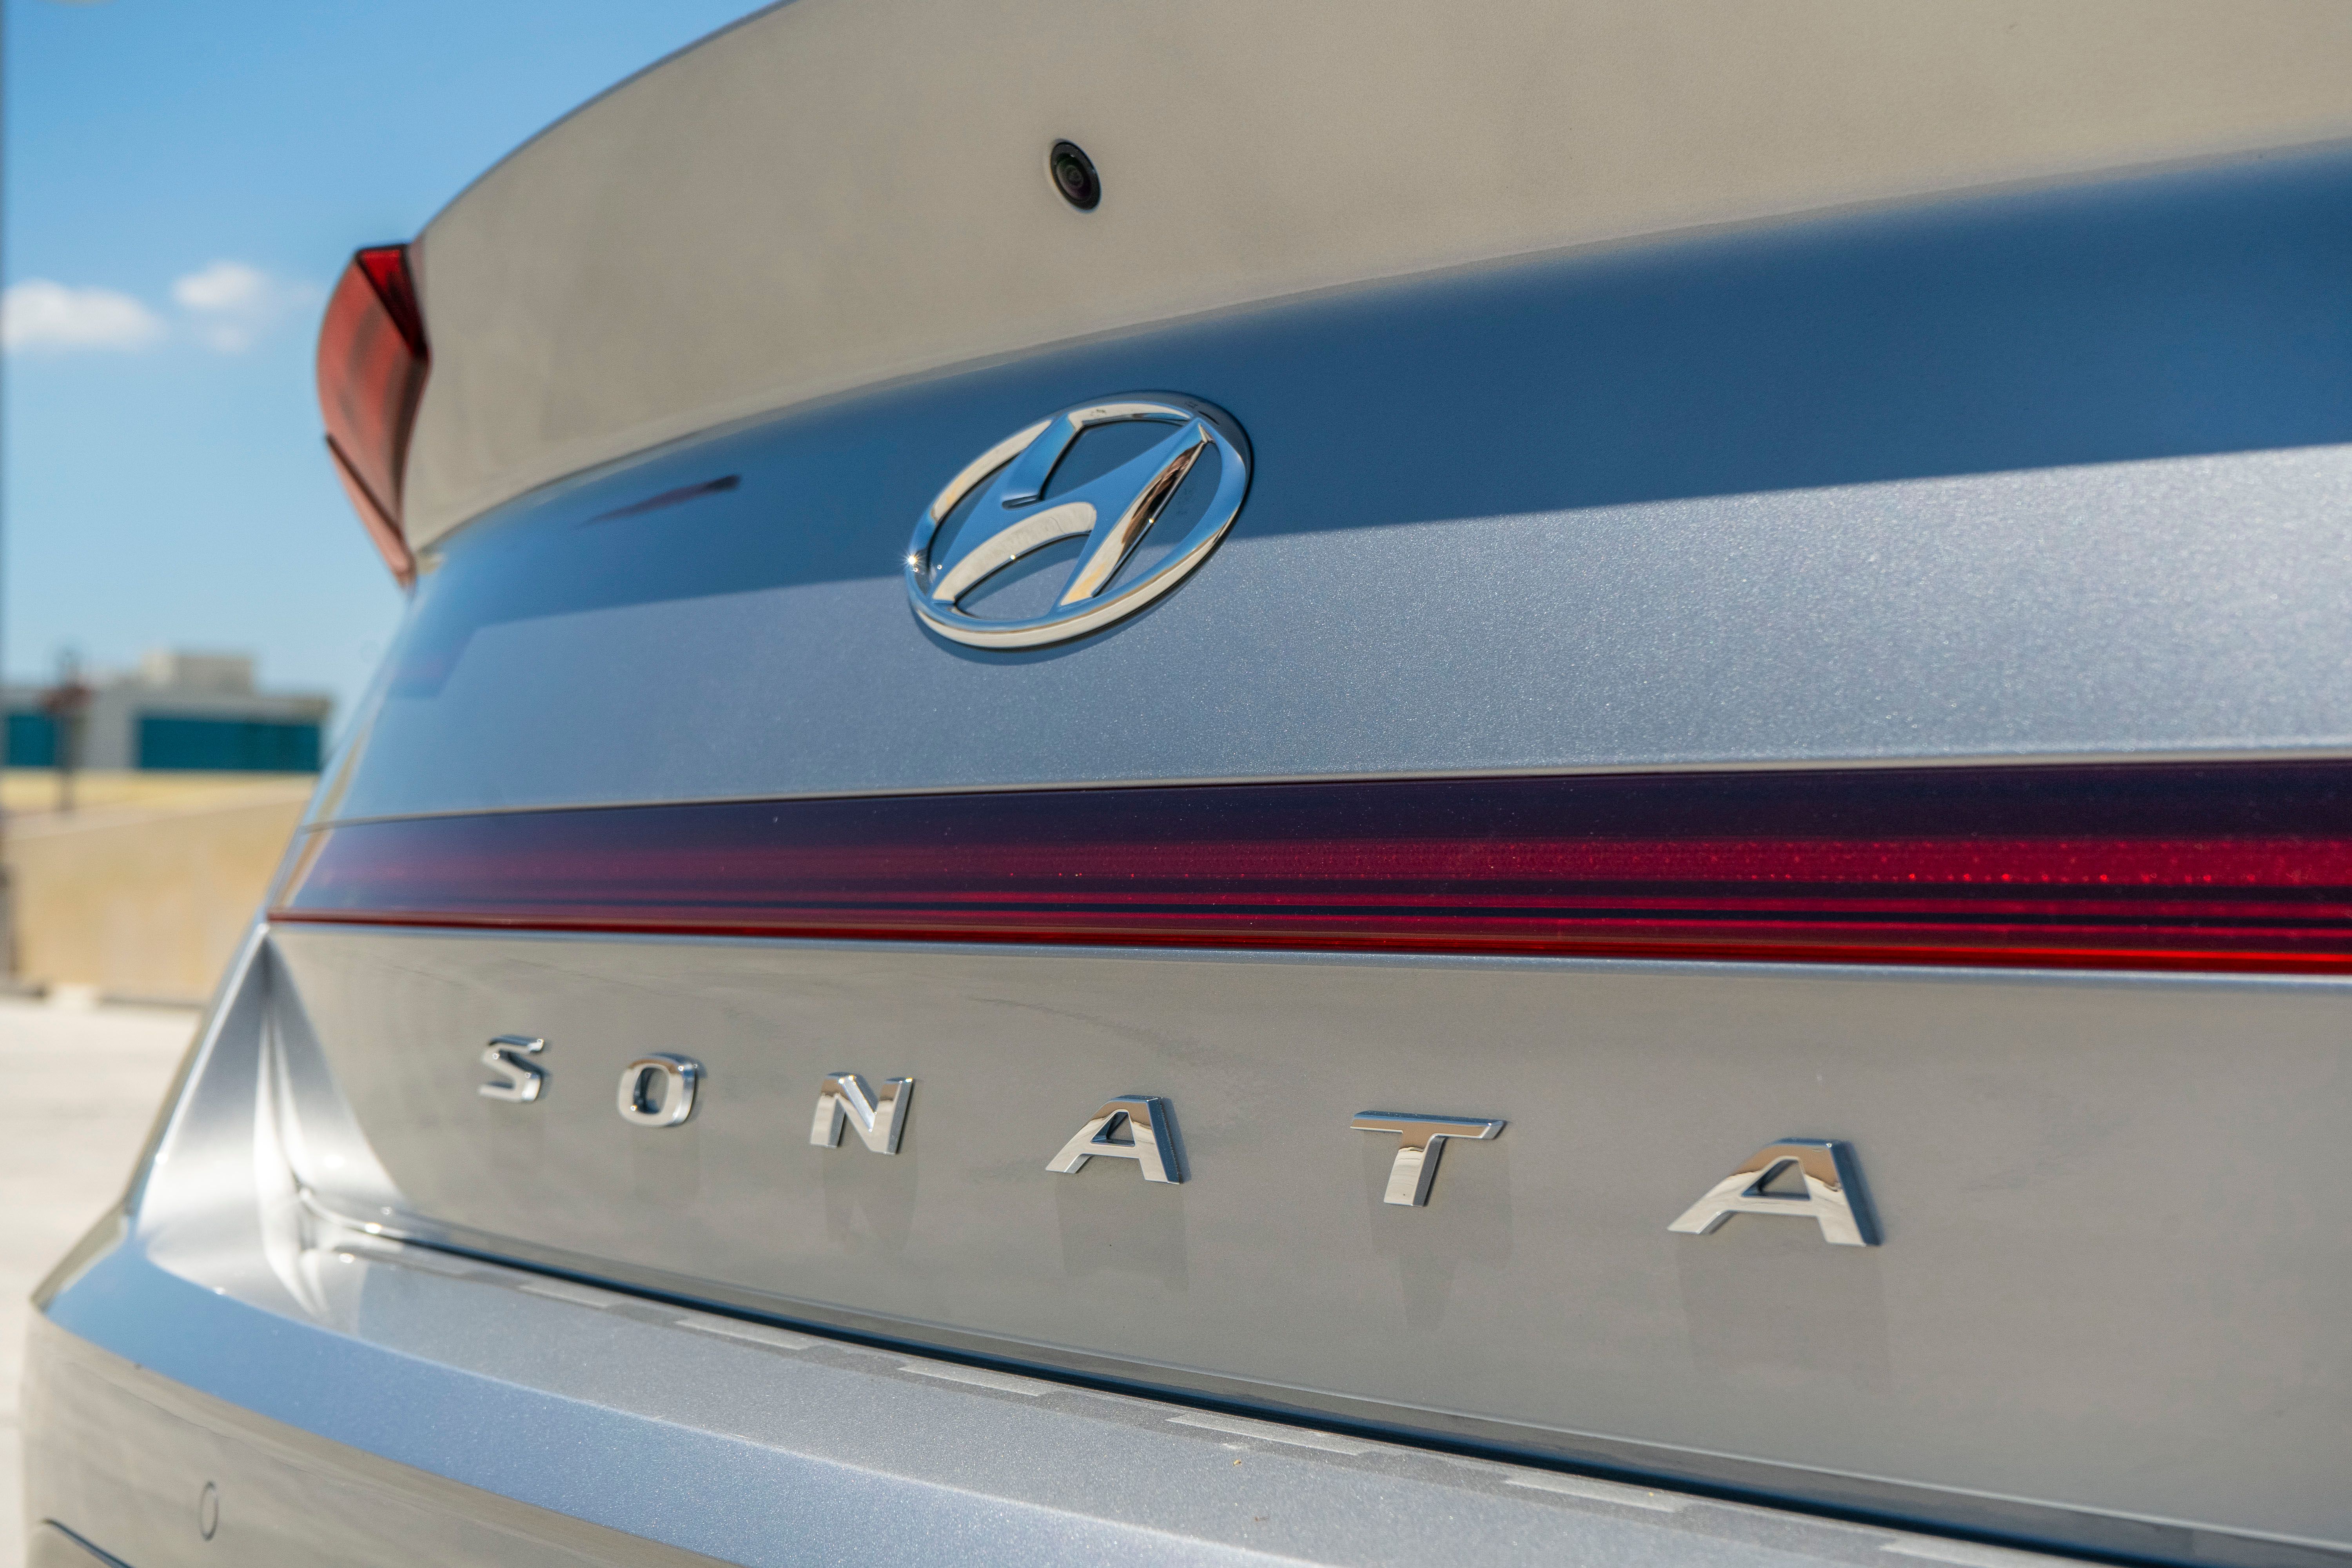 2020 Hyundai Sonata - Driven